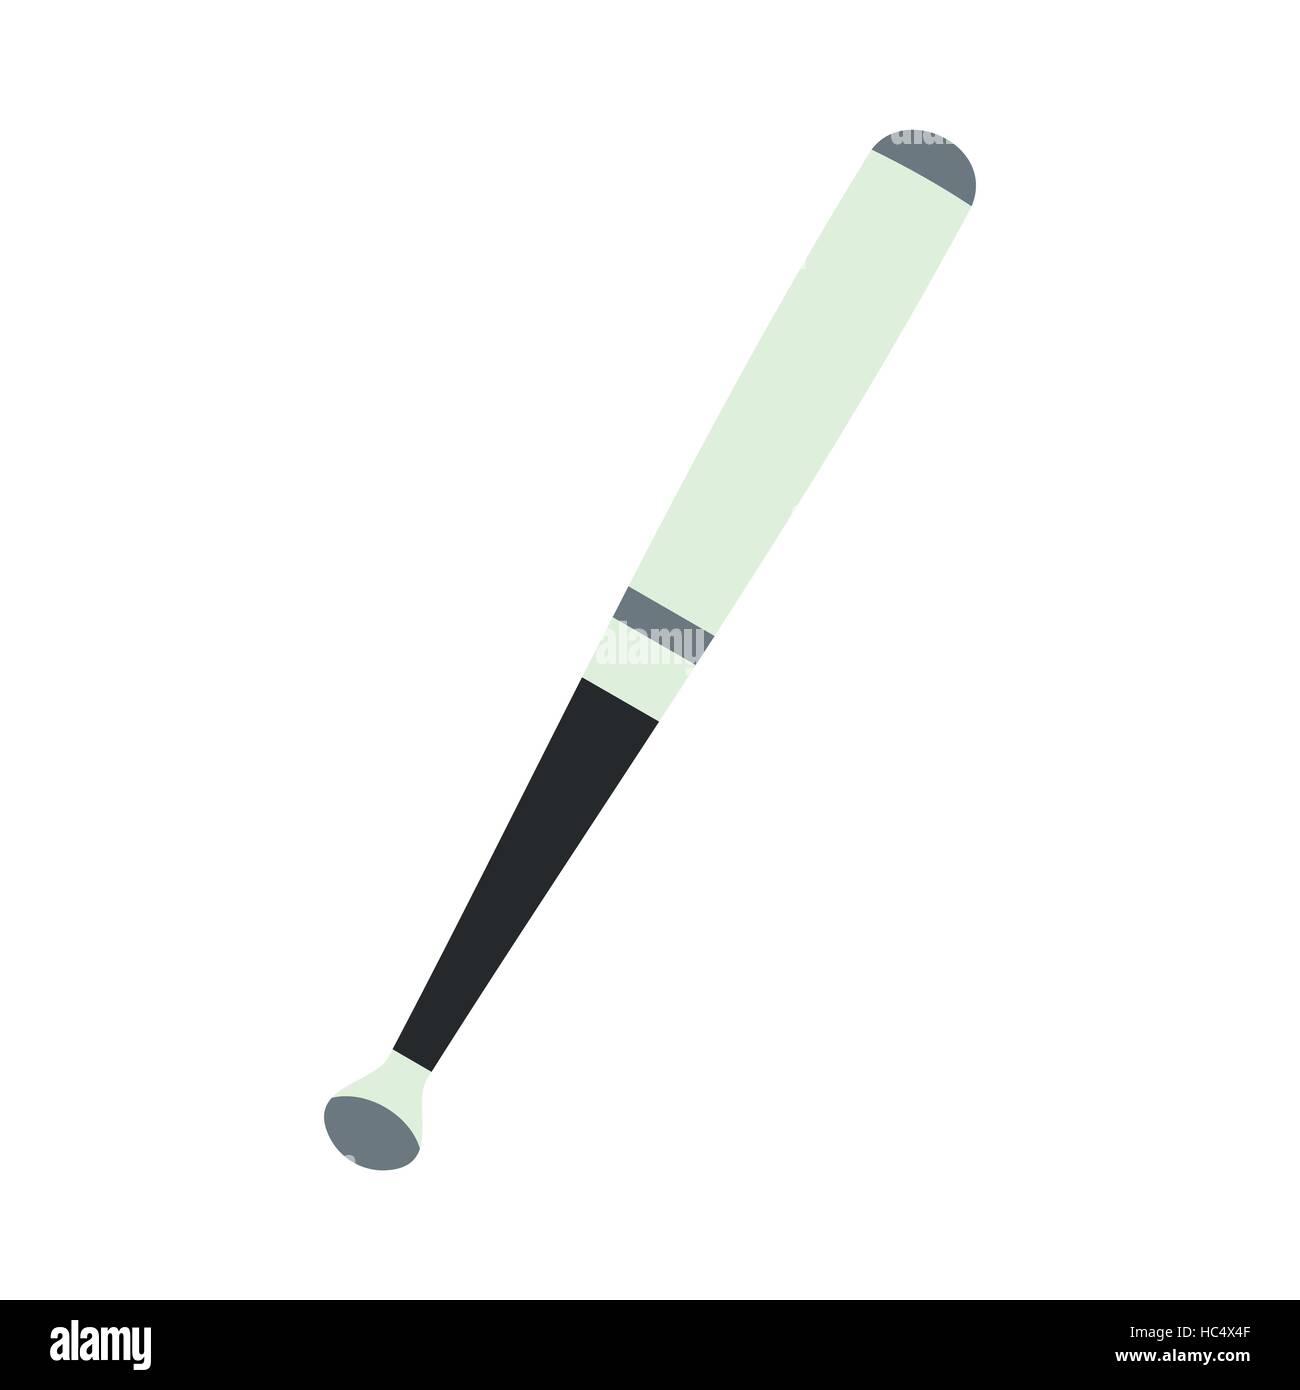 Metallic baseball bat flat icon Stock Vector